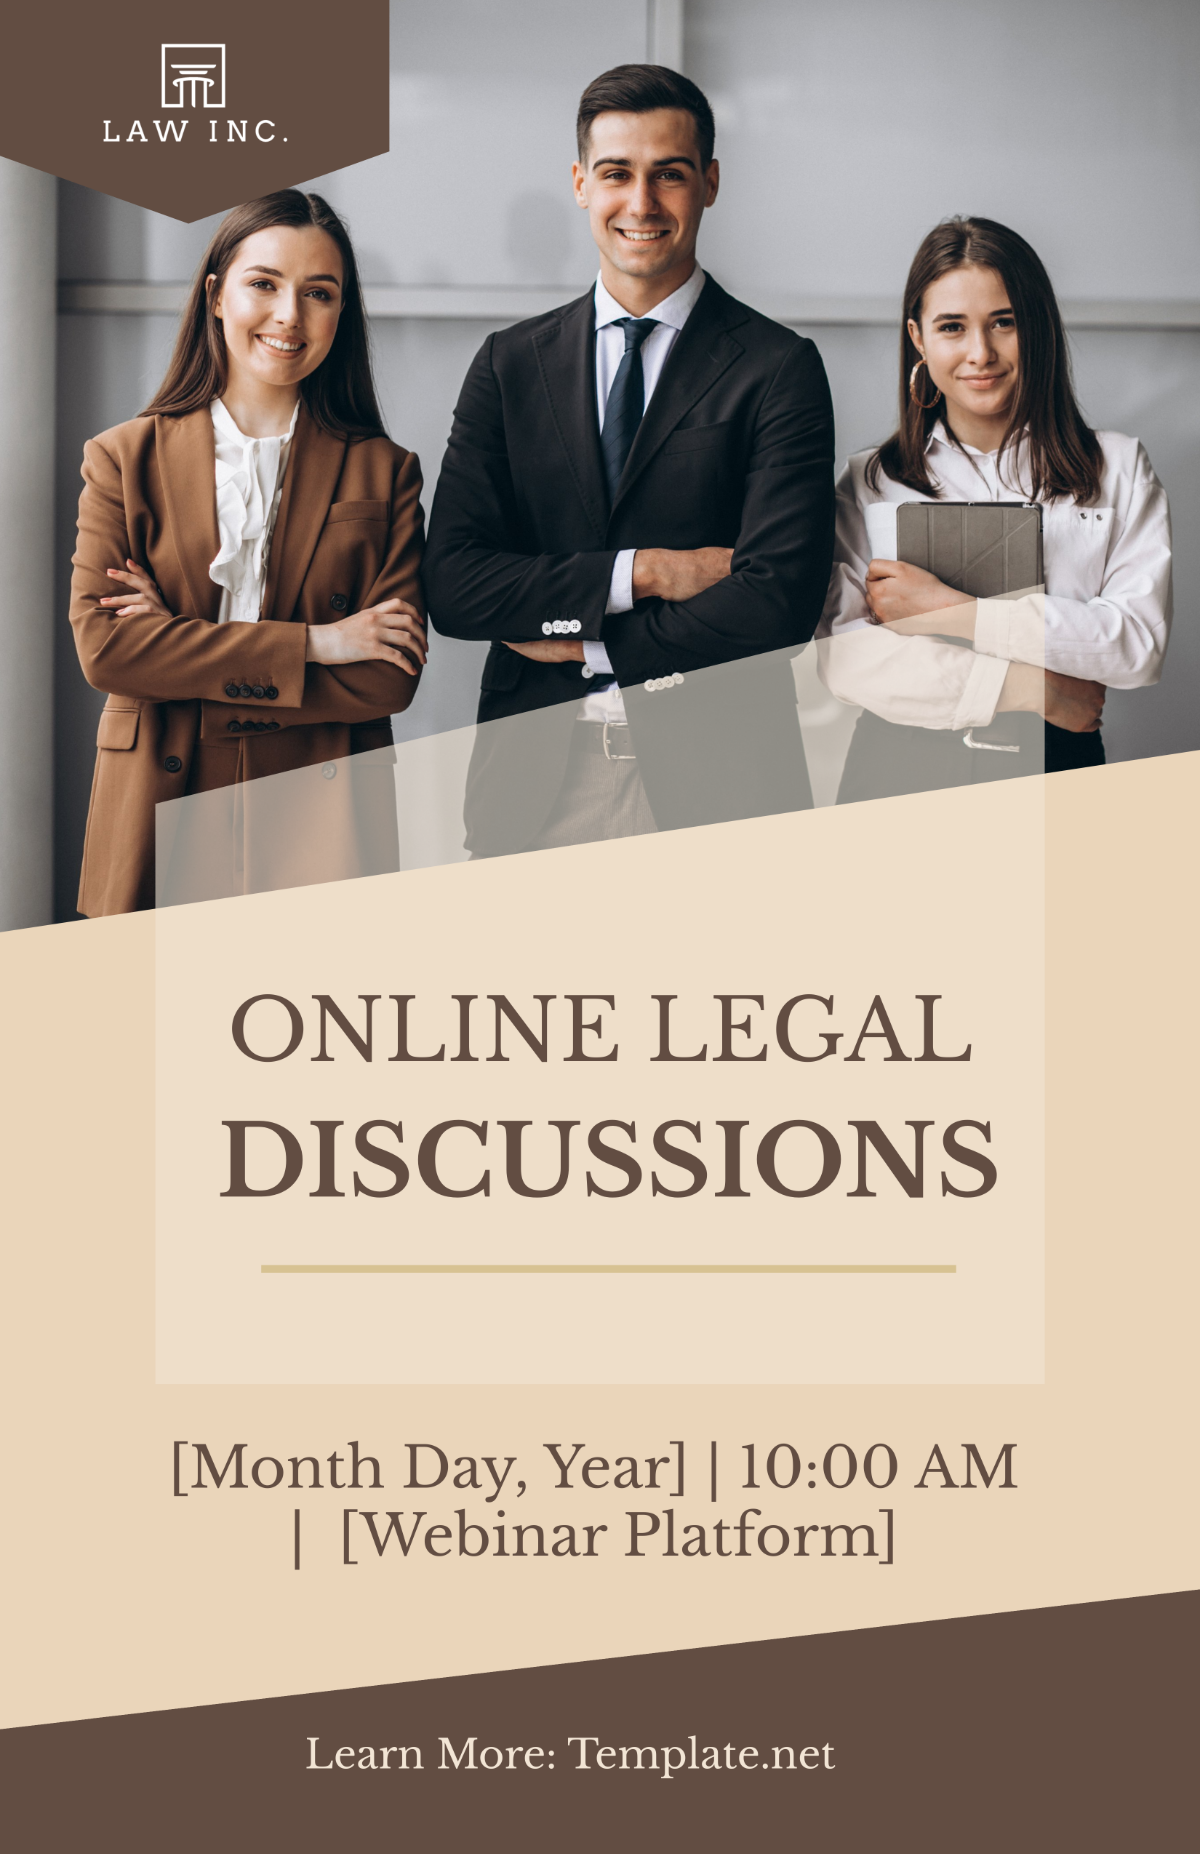 Law Firm Webinar Poster